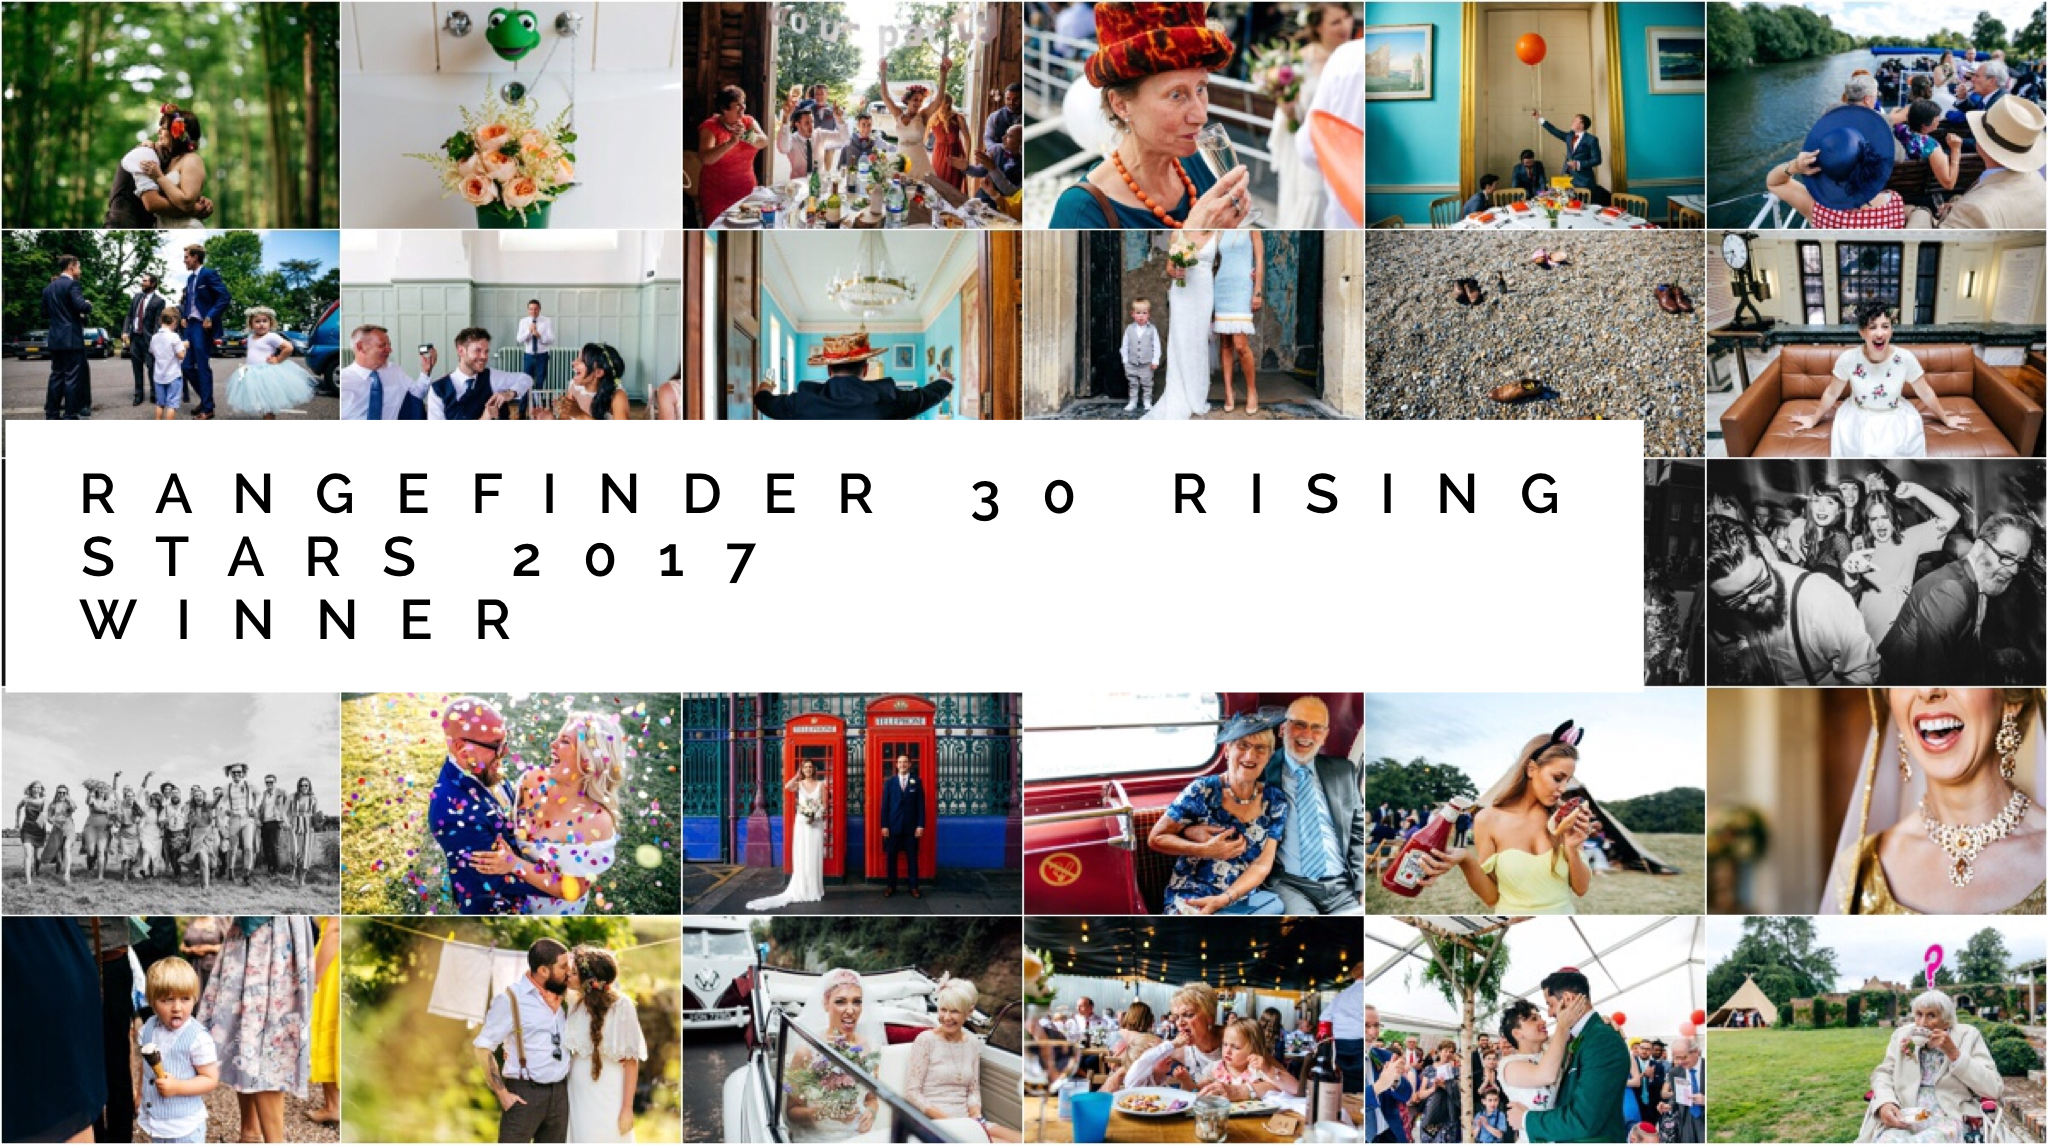 Rangefinder Rising Stars Winner 2017 - collection of award winning wedding images